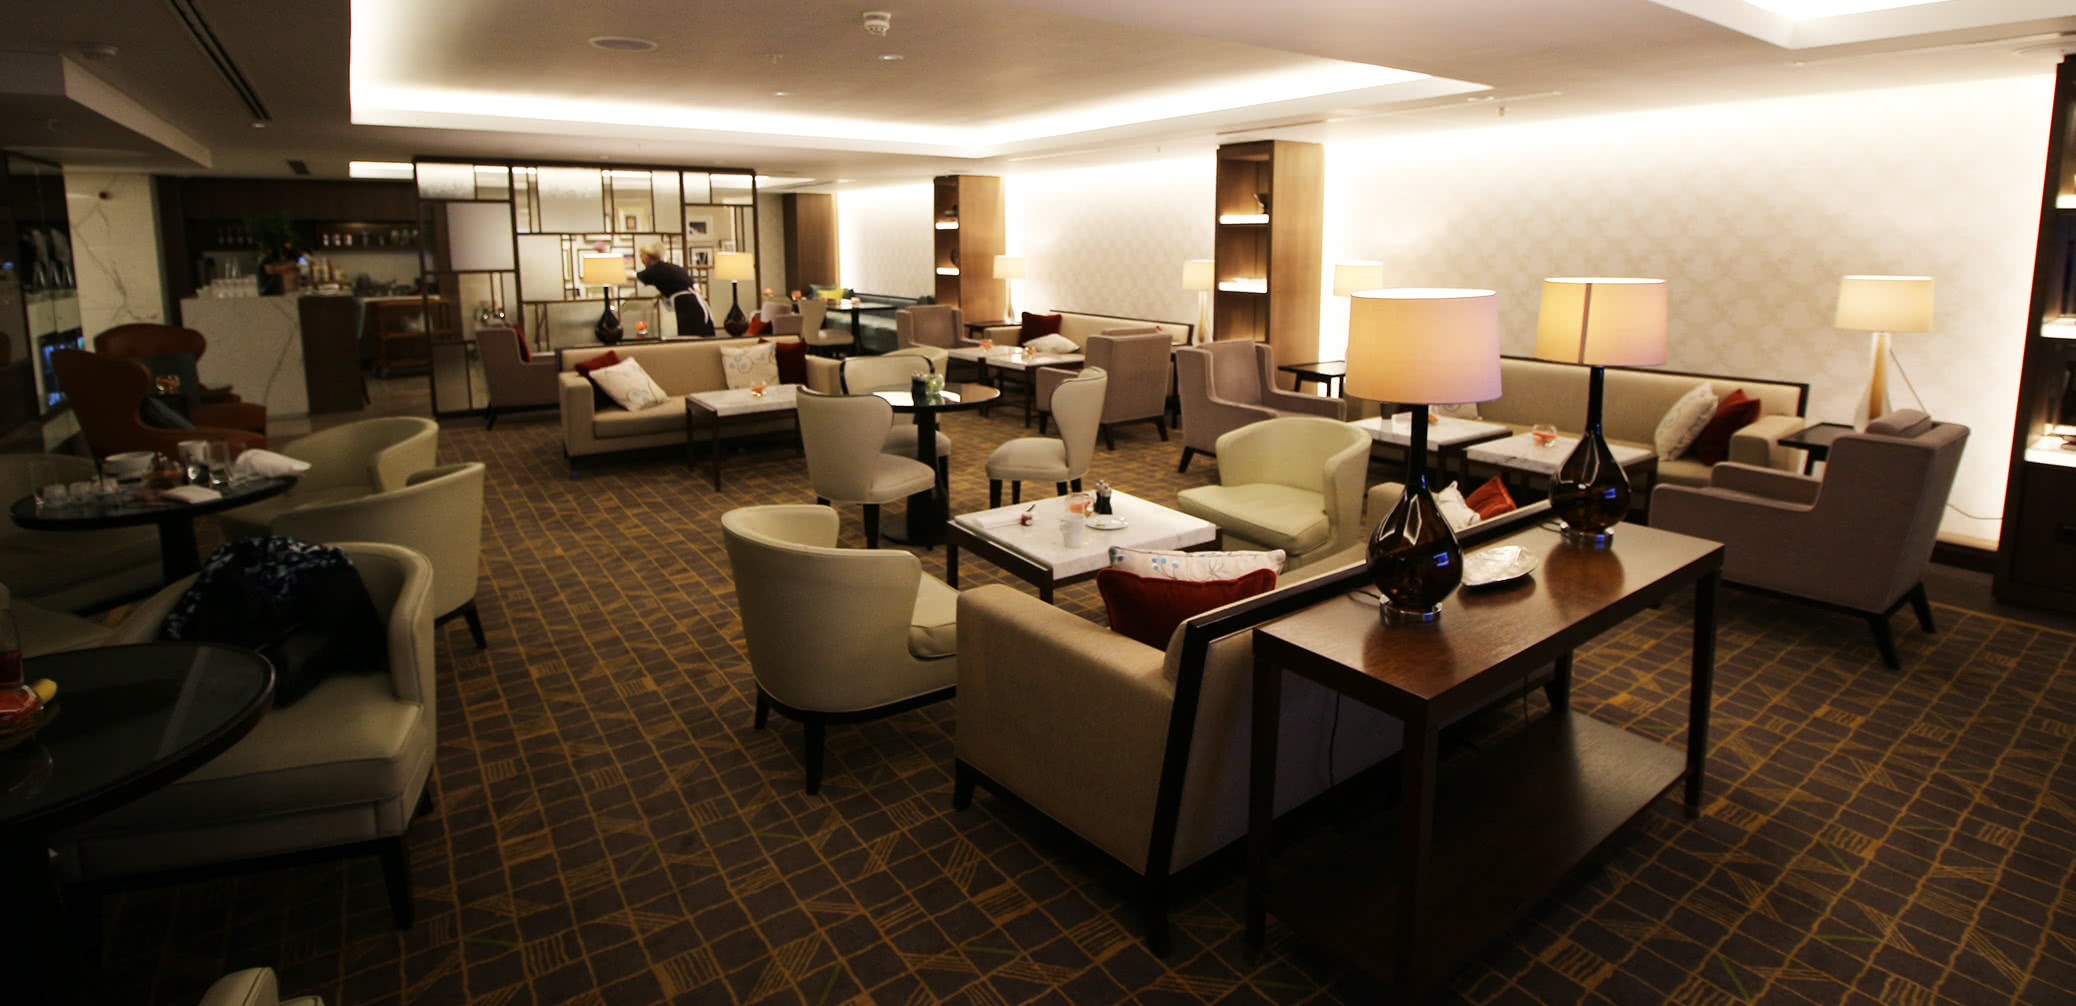 Best Hotel Club Lounges In St Louis, Missouri